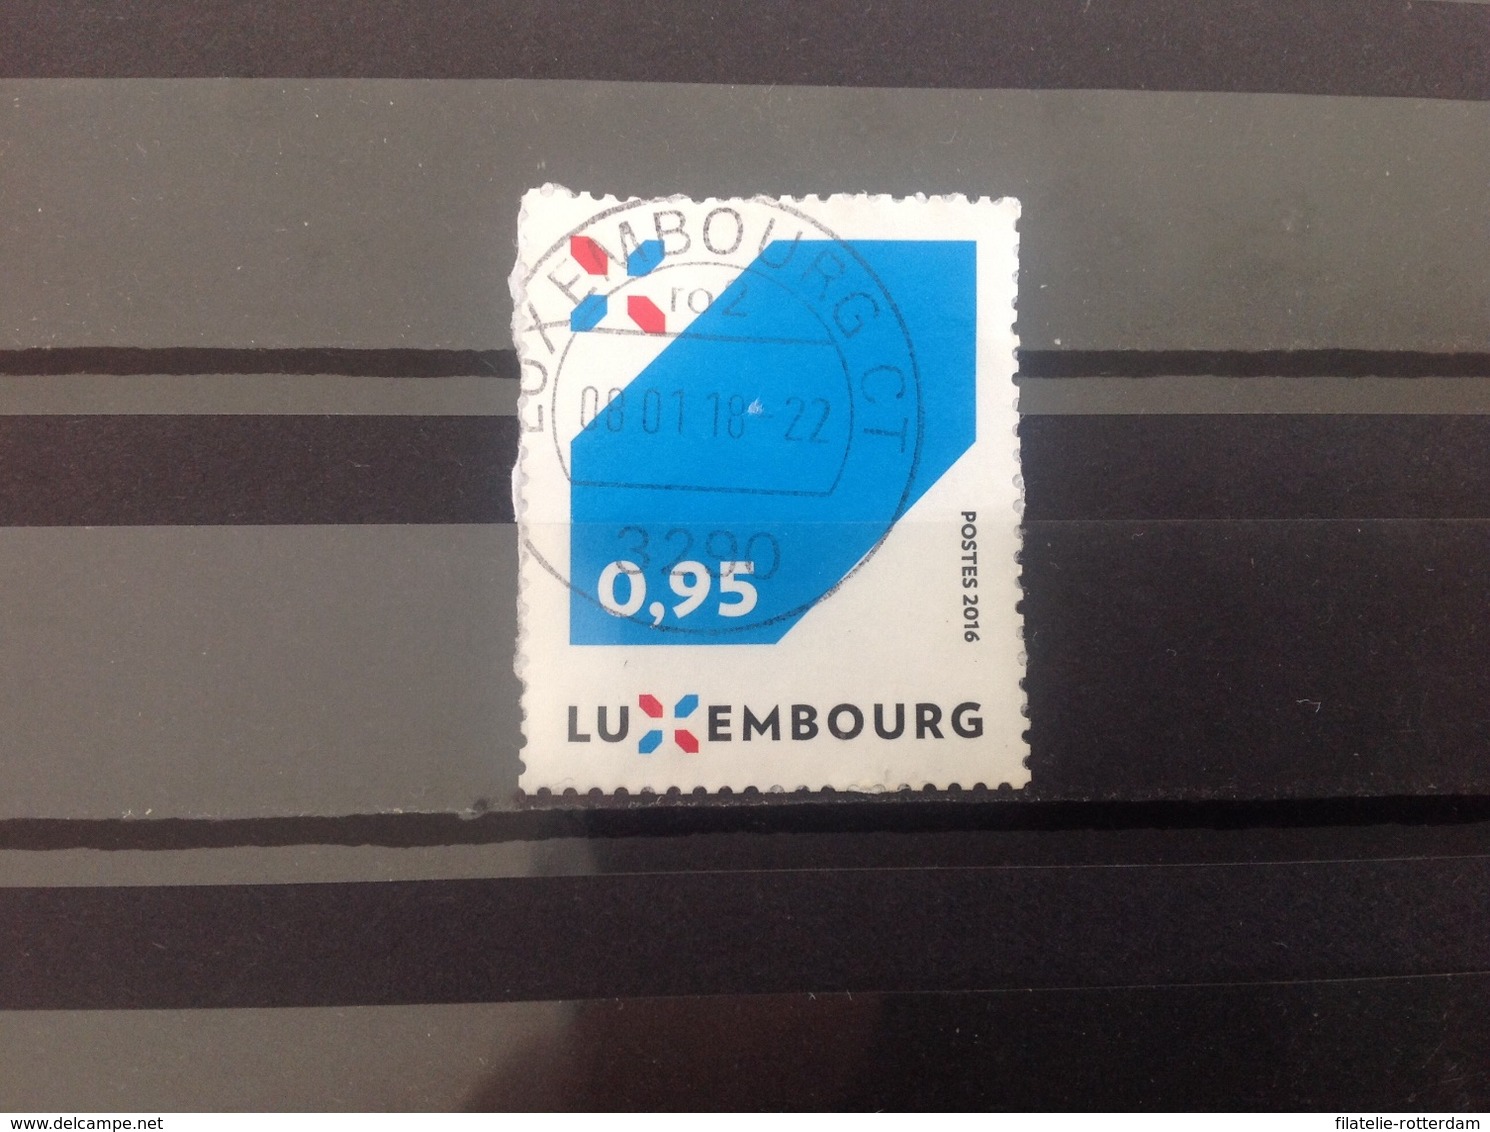 Luxemburg / Luxembourg - Handtekening Van Luxemburg (0.95) 2016 - Used Stamps